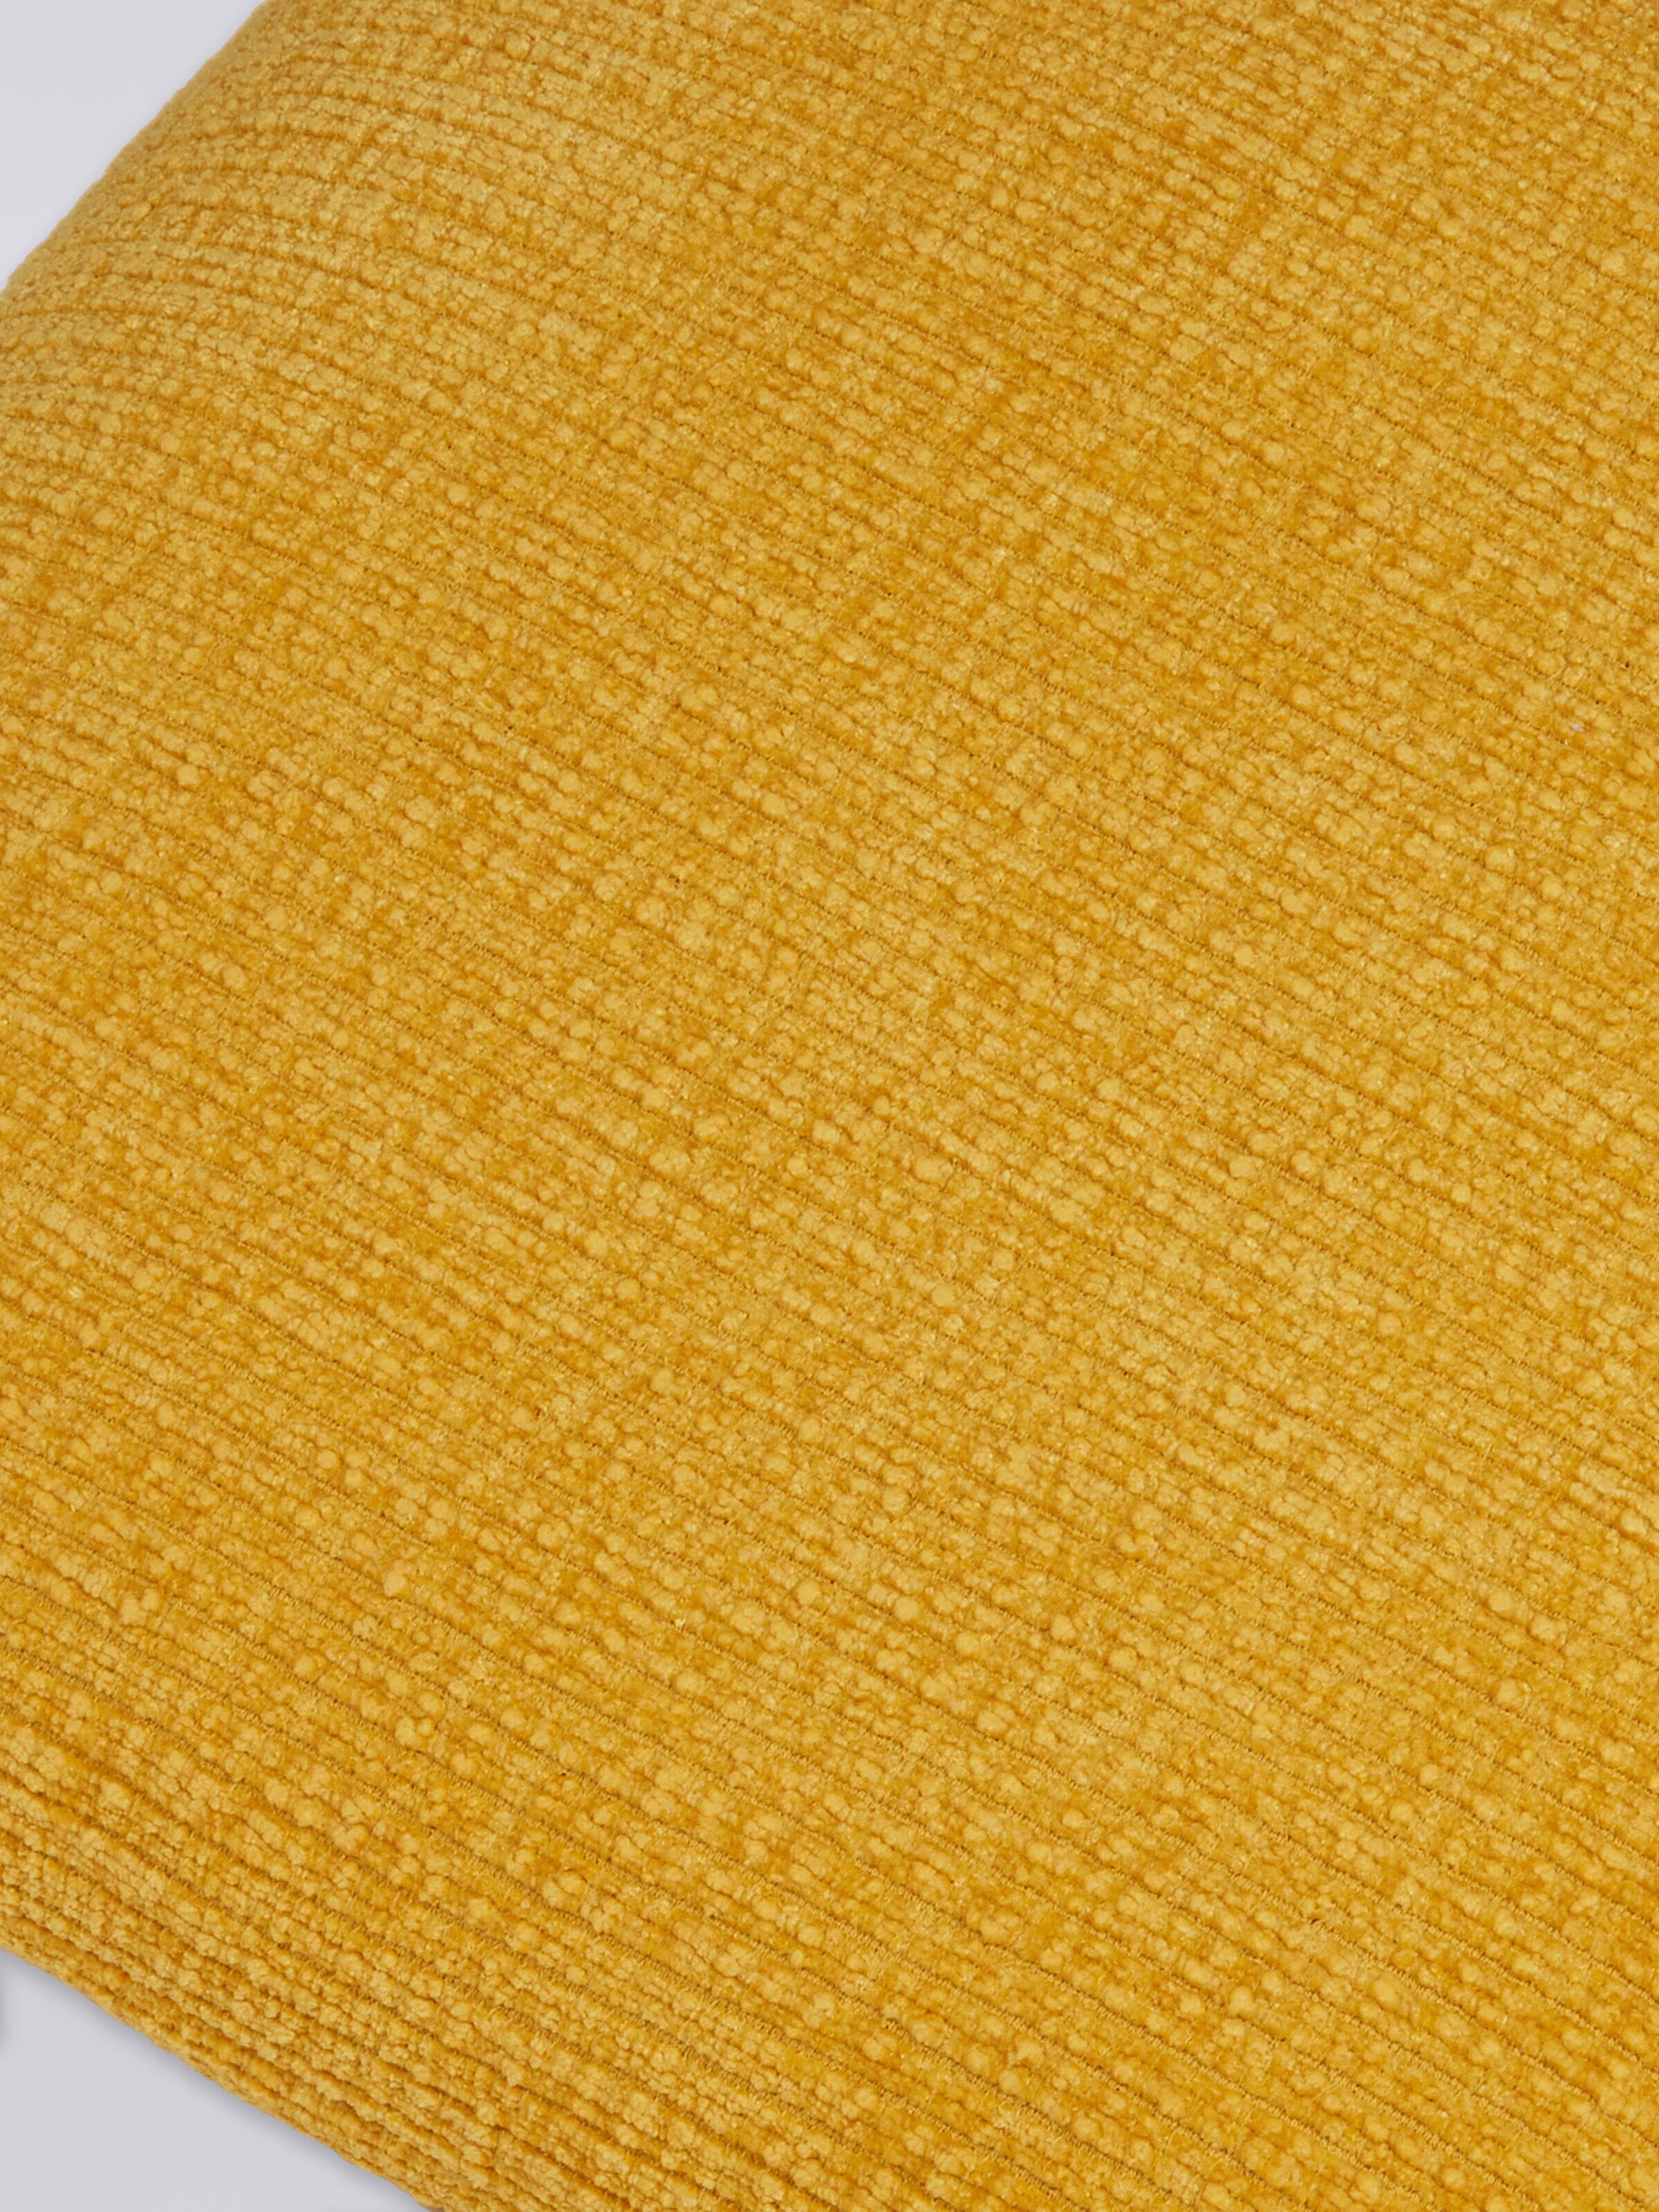 Baracoa cushion 60x60 cm, Multicoloured  - 2